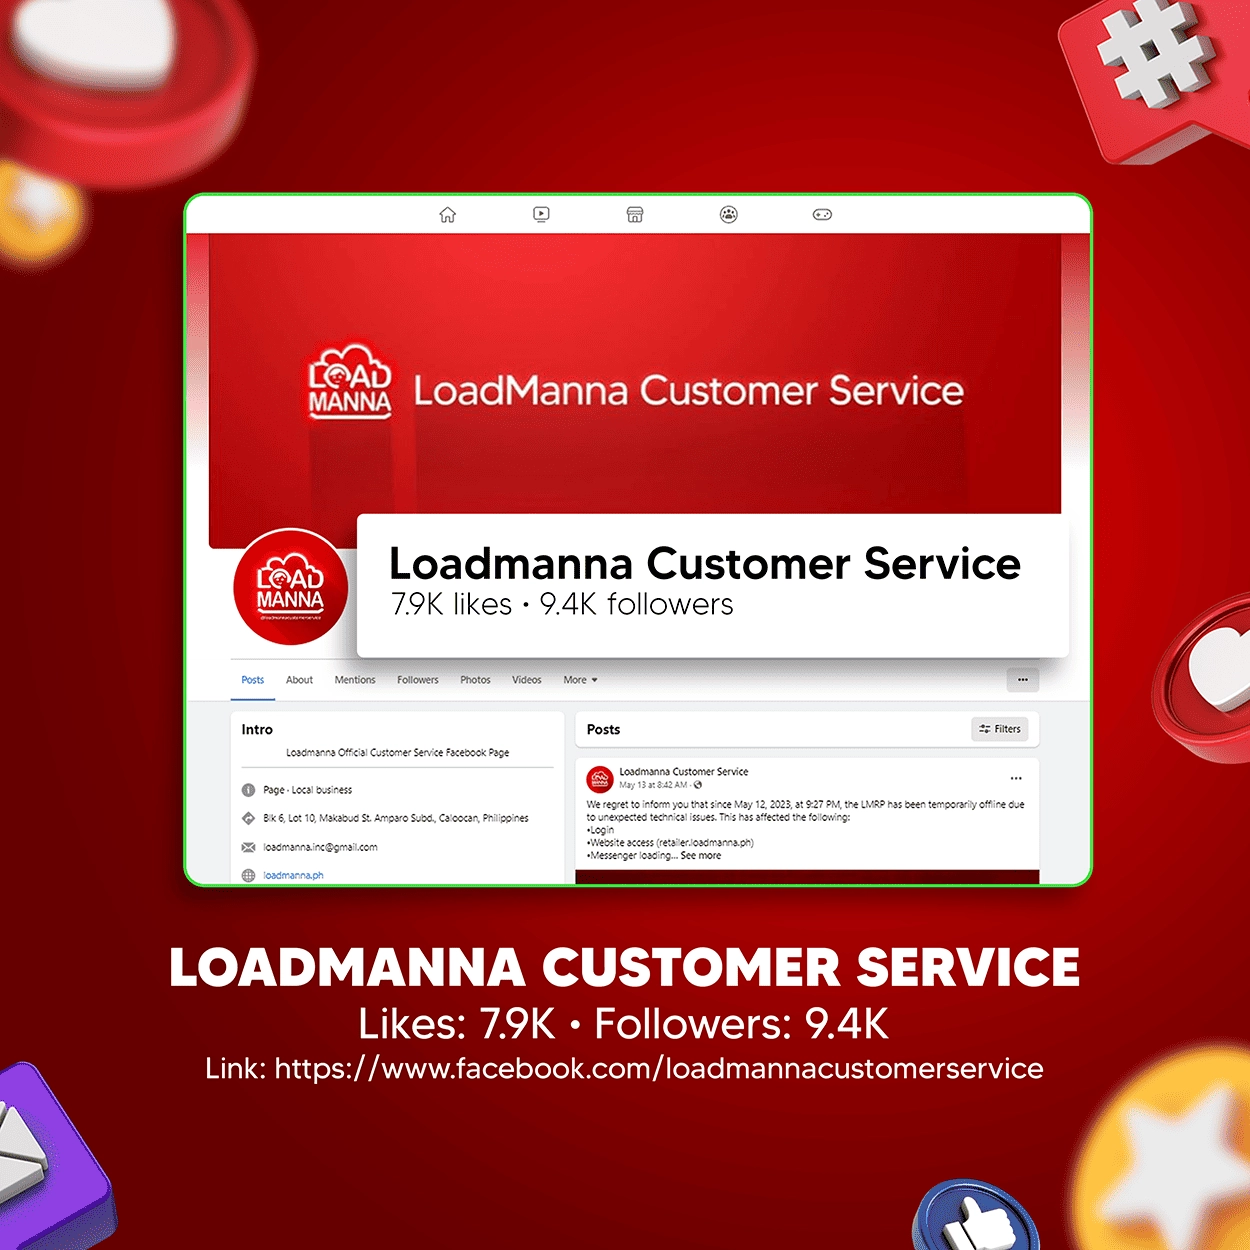 loadmanna customer service facebook page